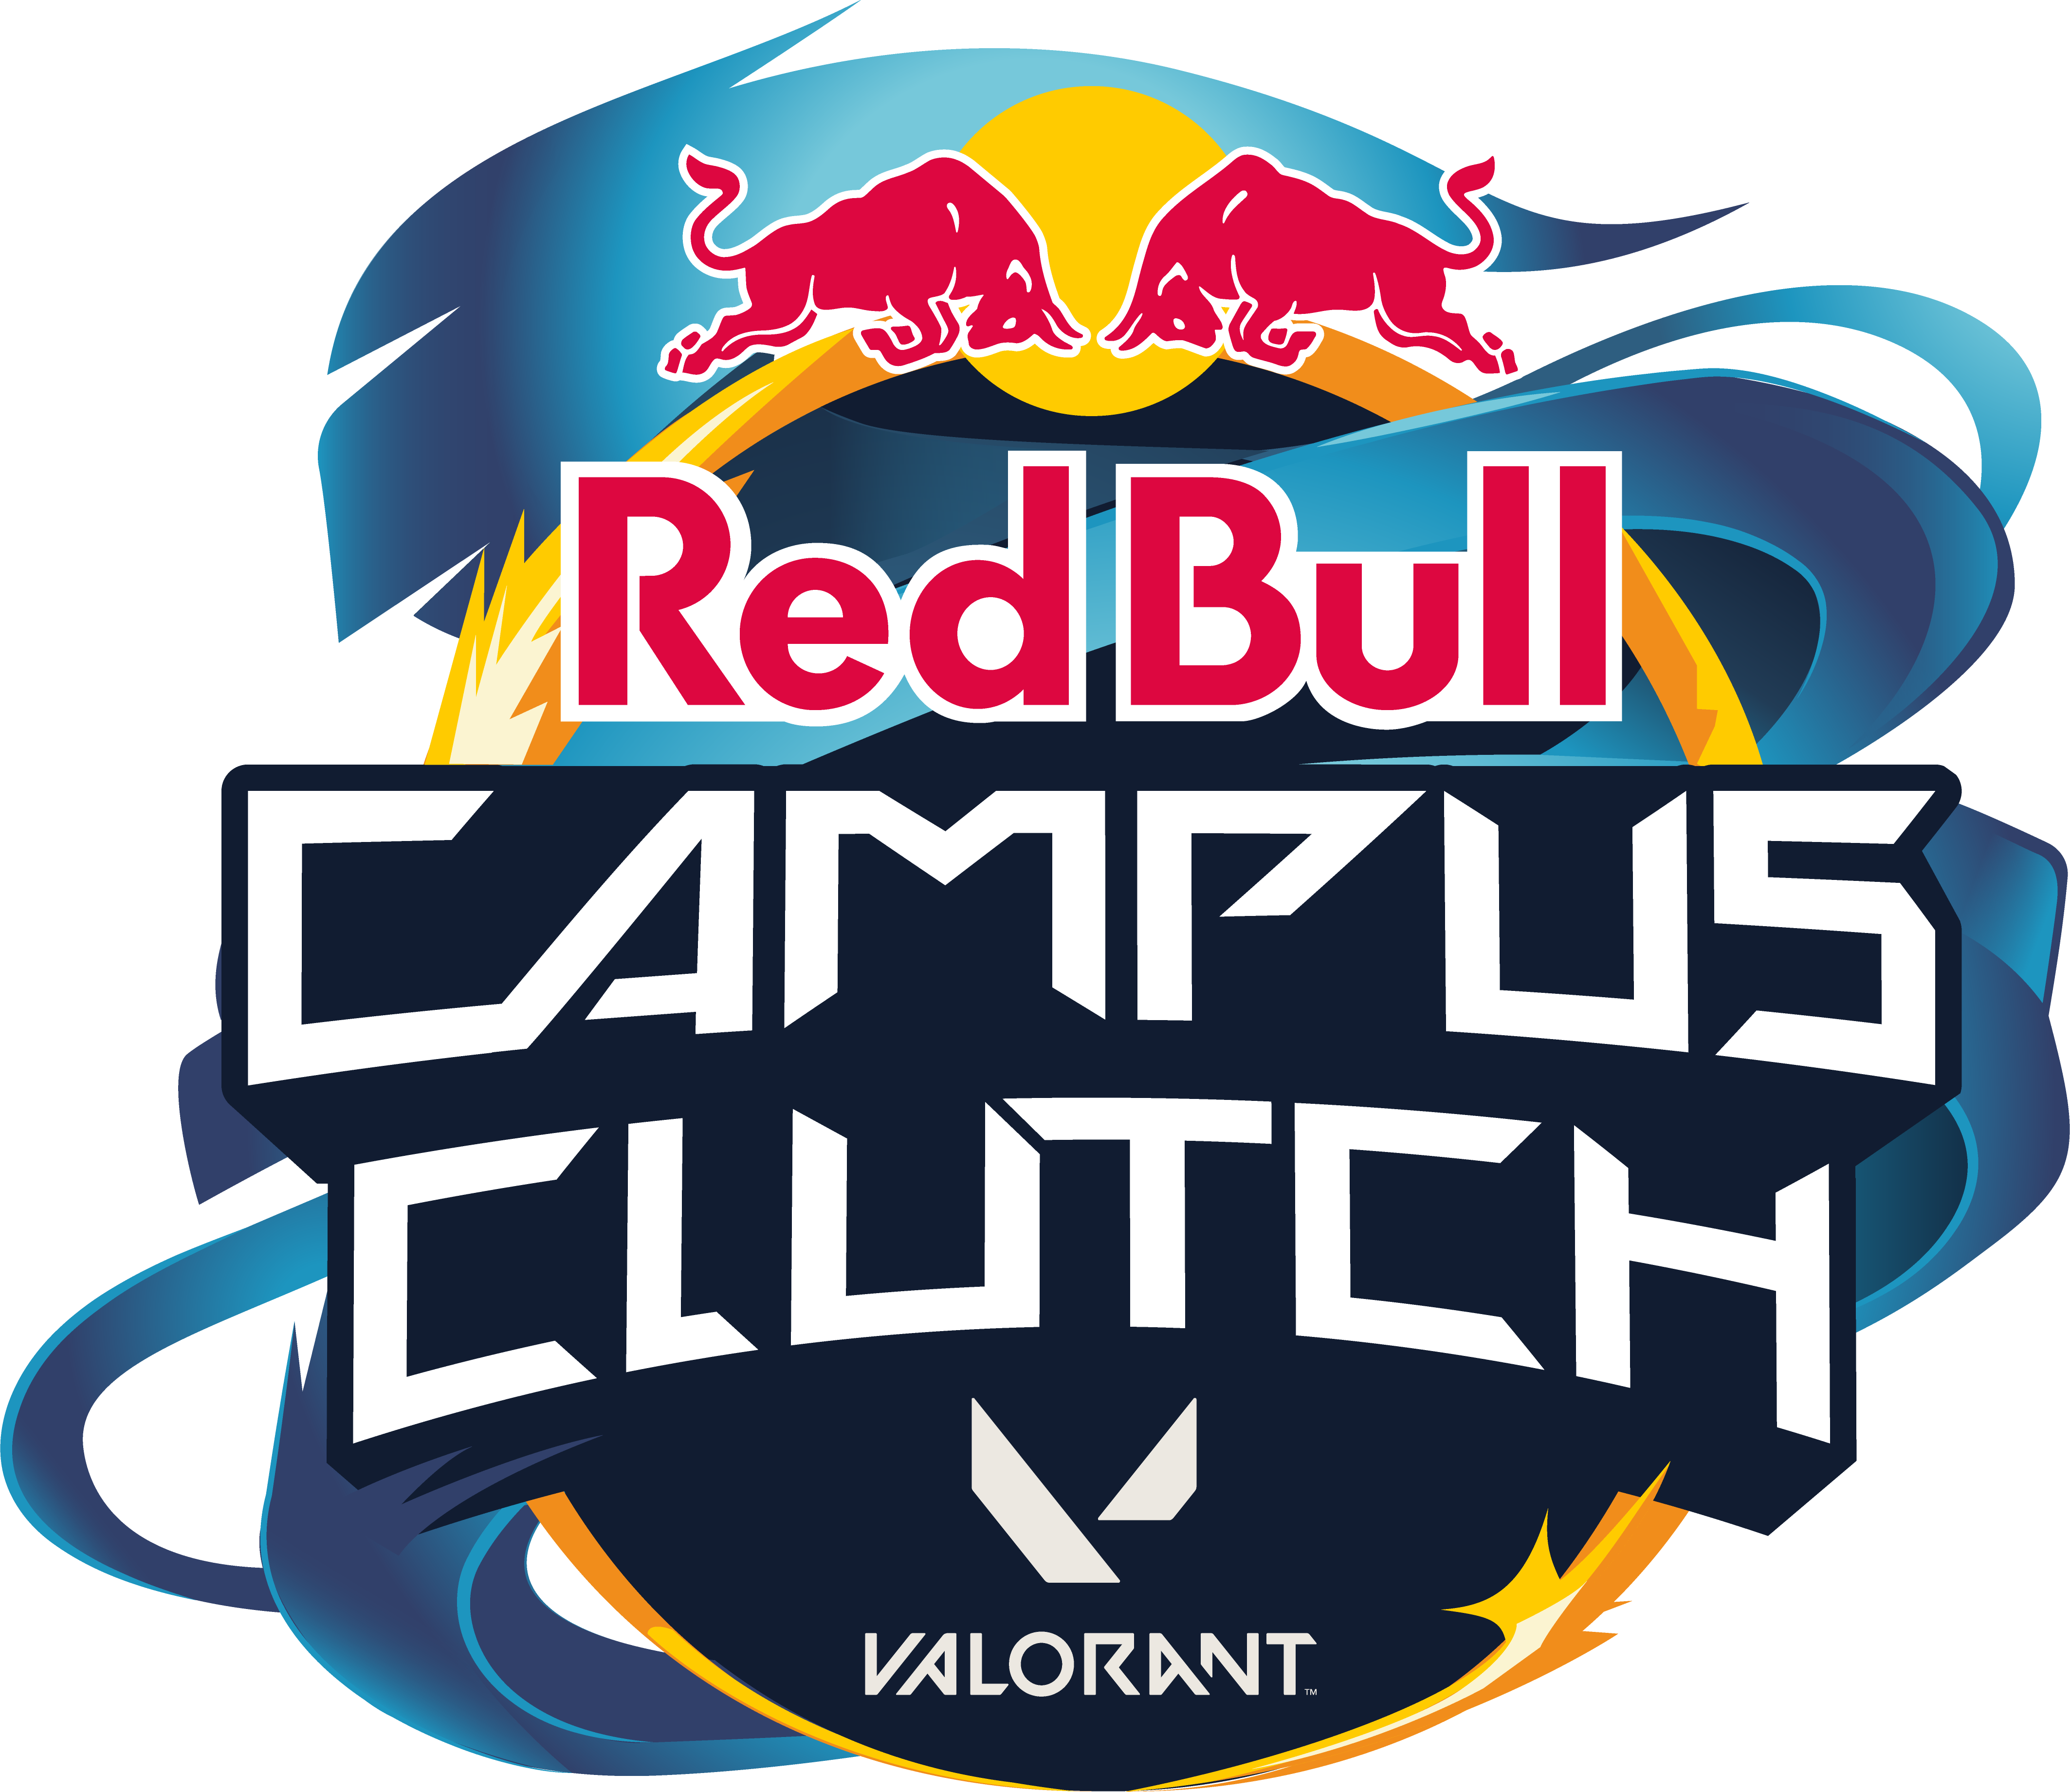 Red Bull Campus Clutch Logo ft Valorant